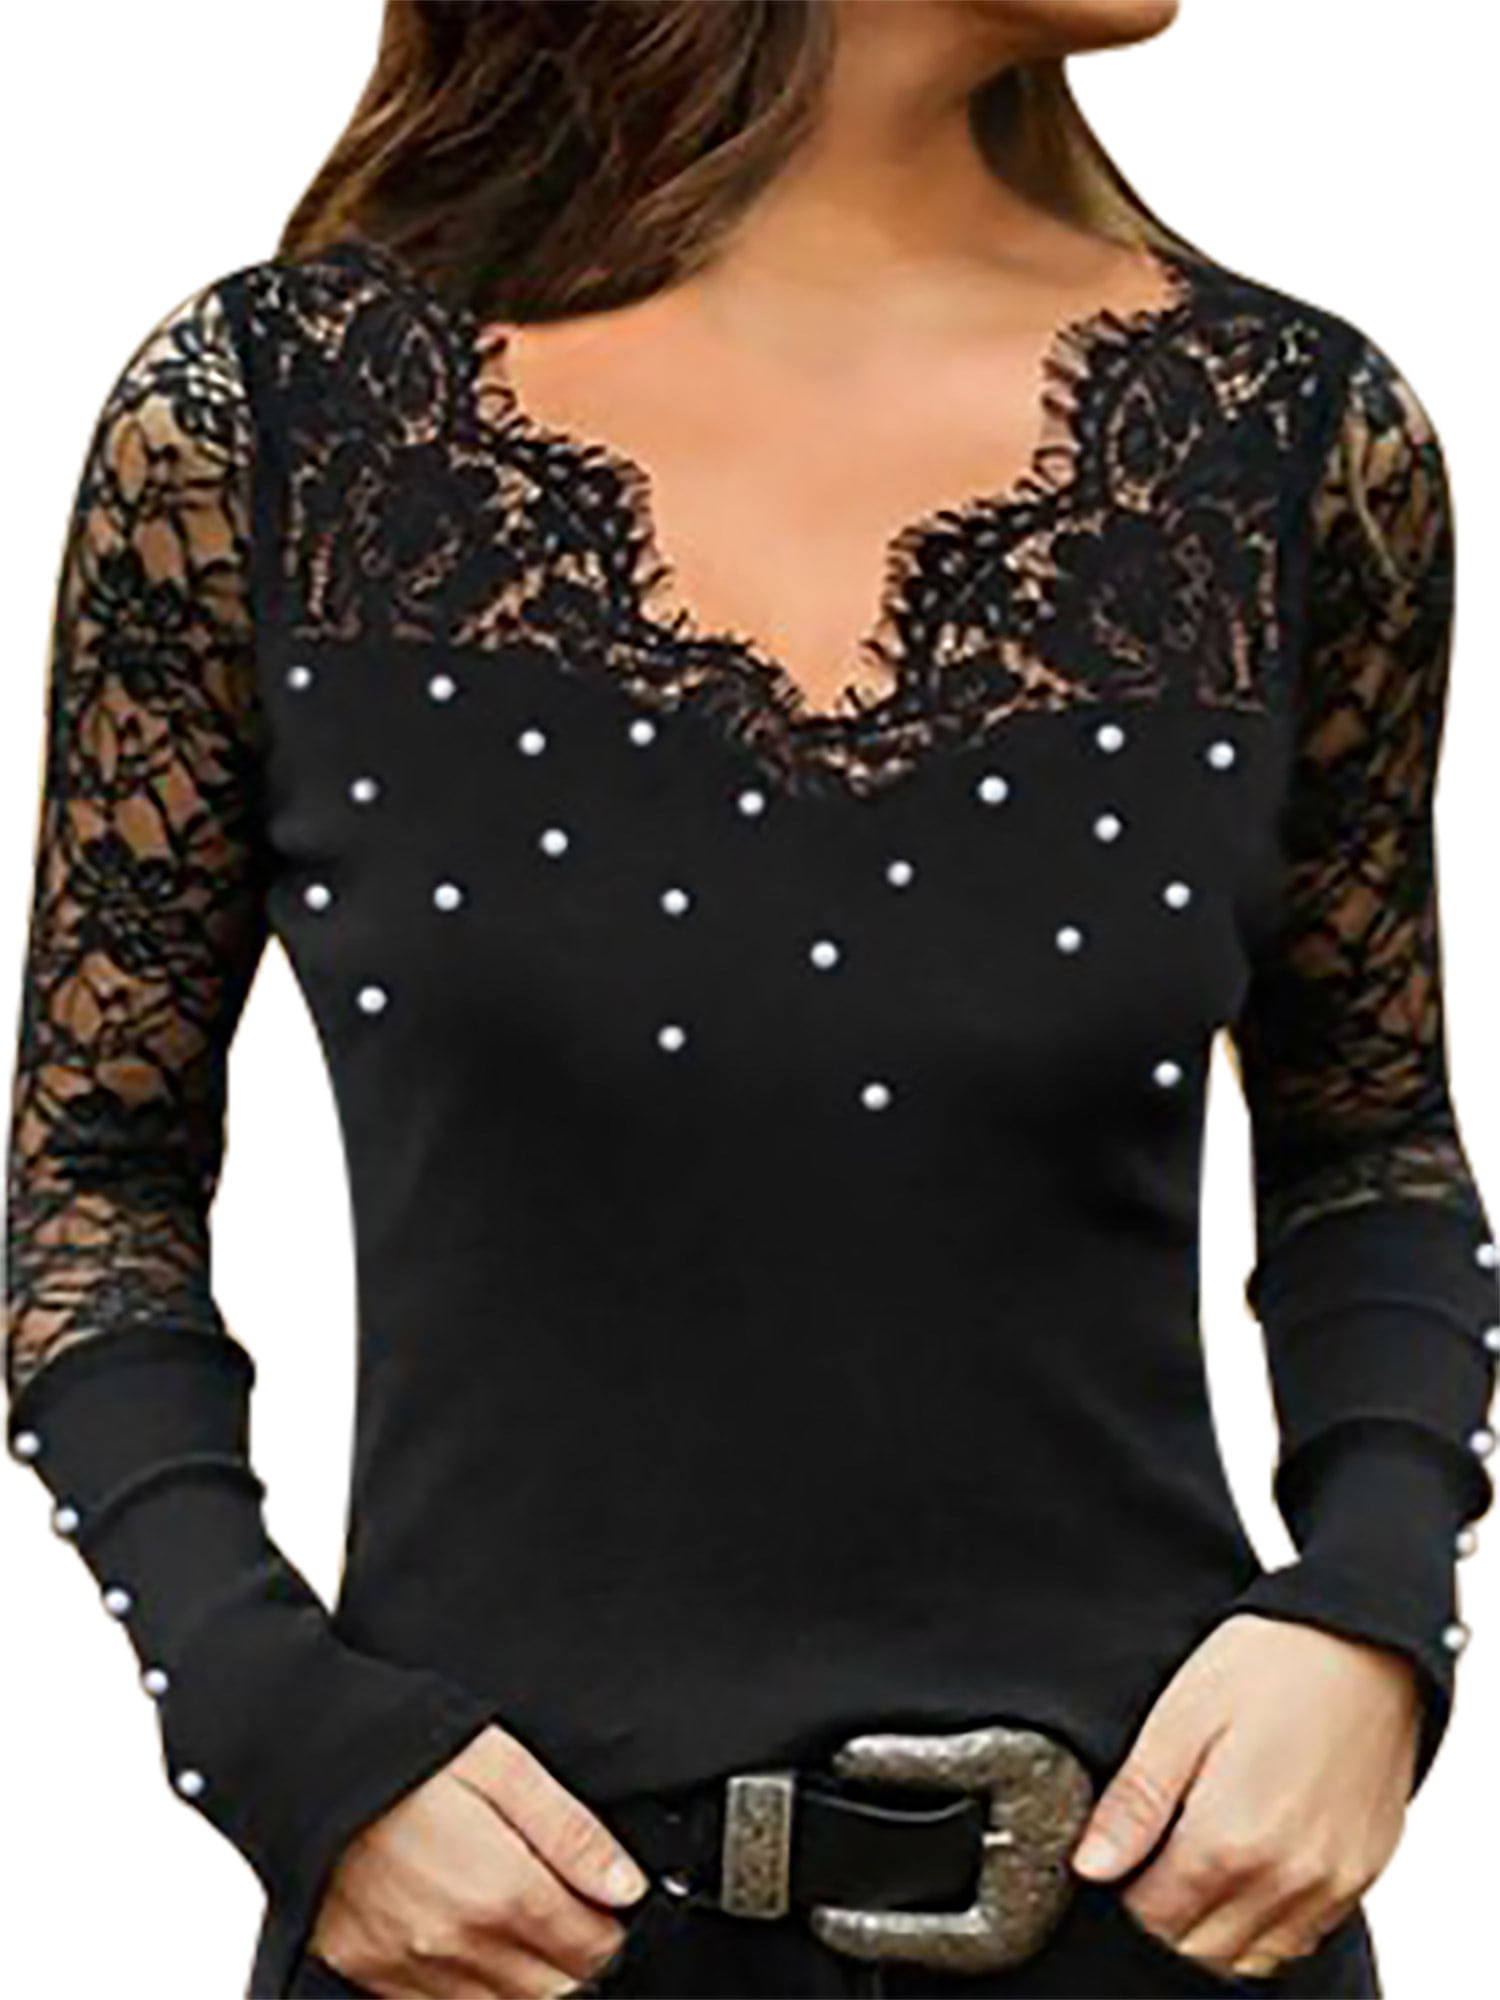 Fee tunic woman tunic stretch lace top